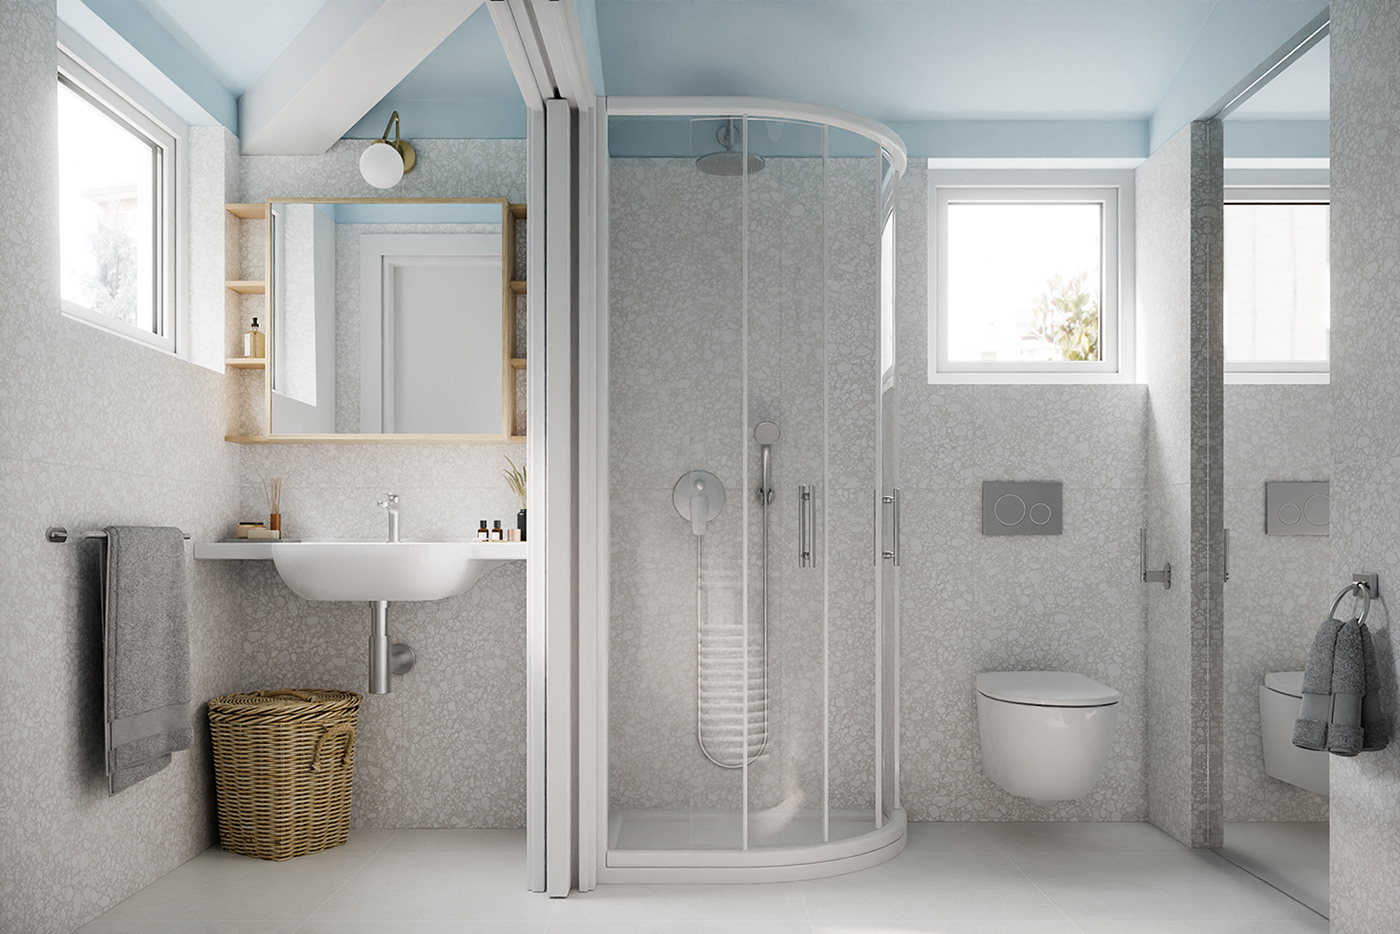 Image may contain: indoor, bathroom and plumbing fixture